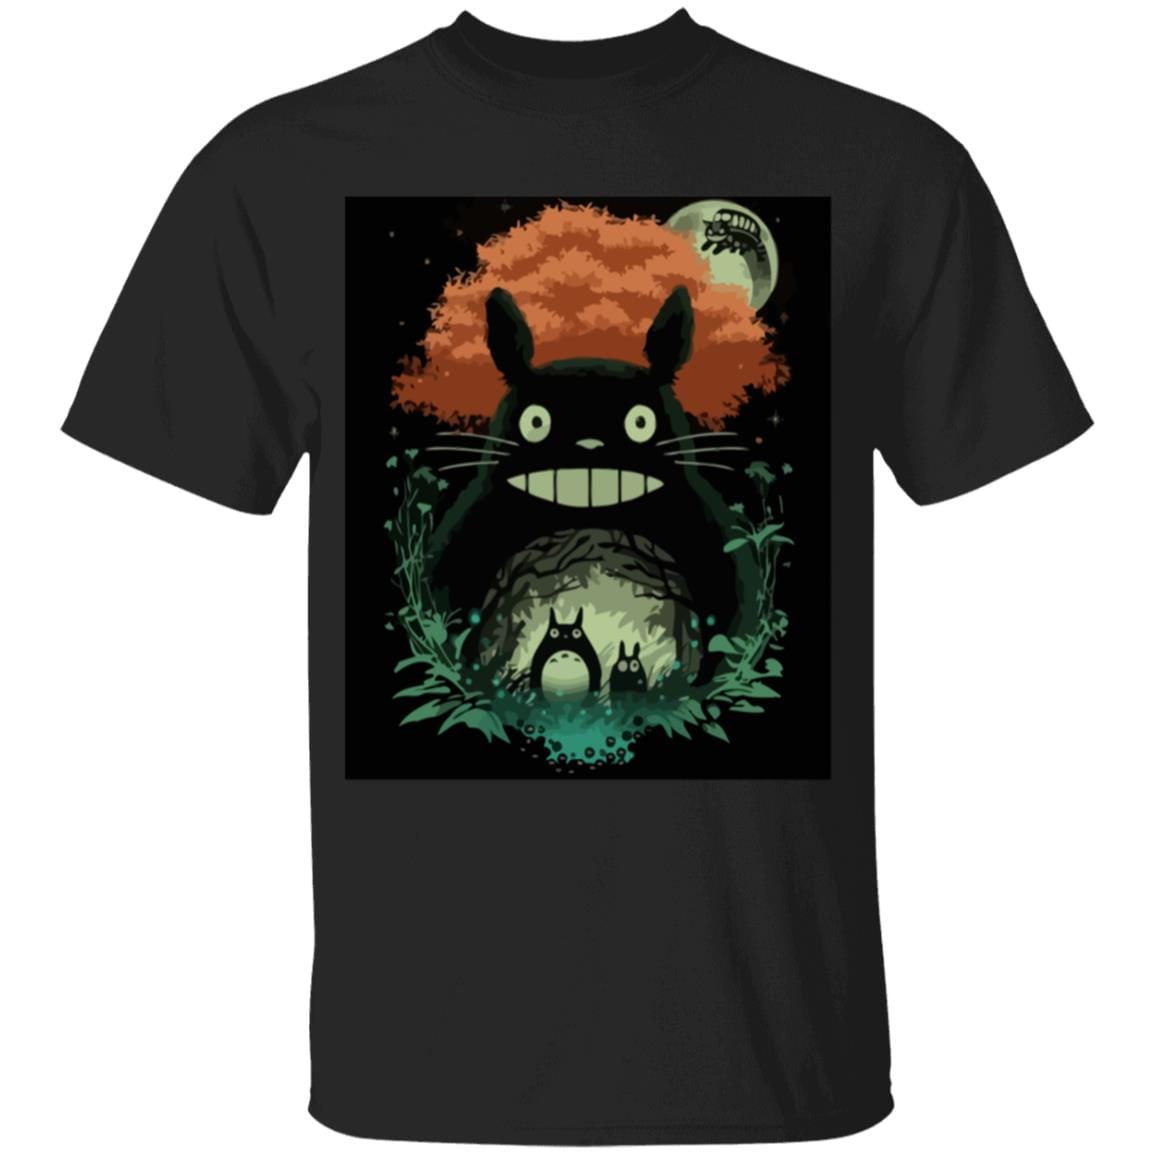 My Neighbor Totoro – The Magic Forest Kid T Shirt